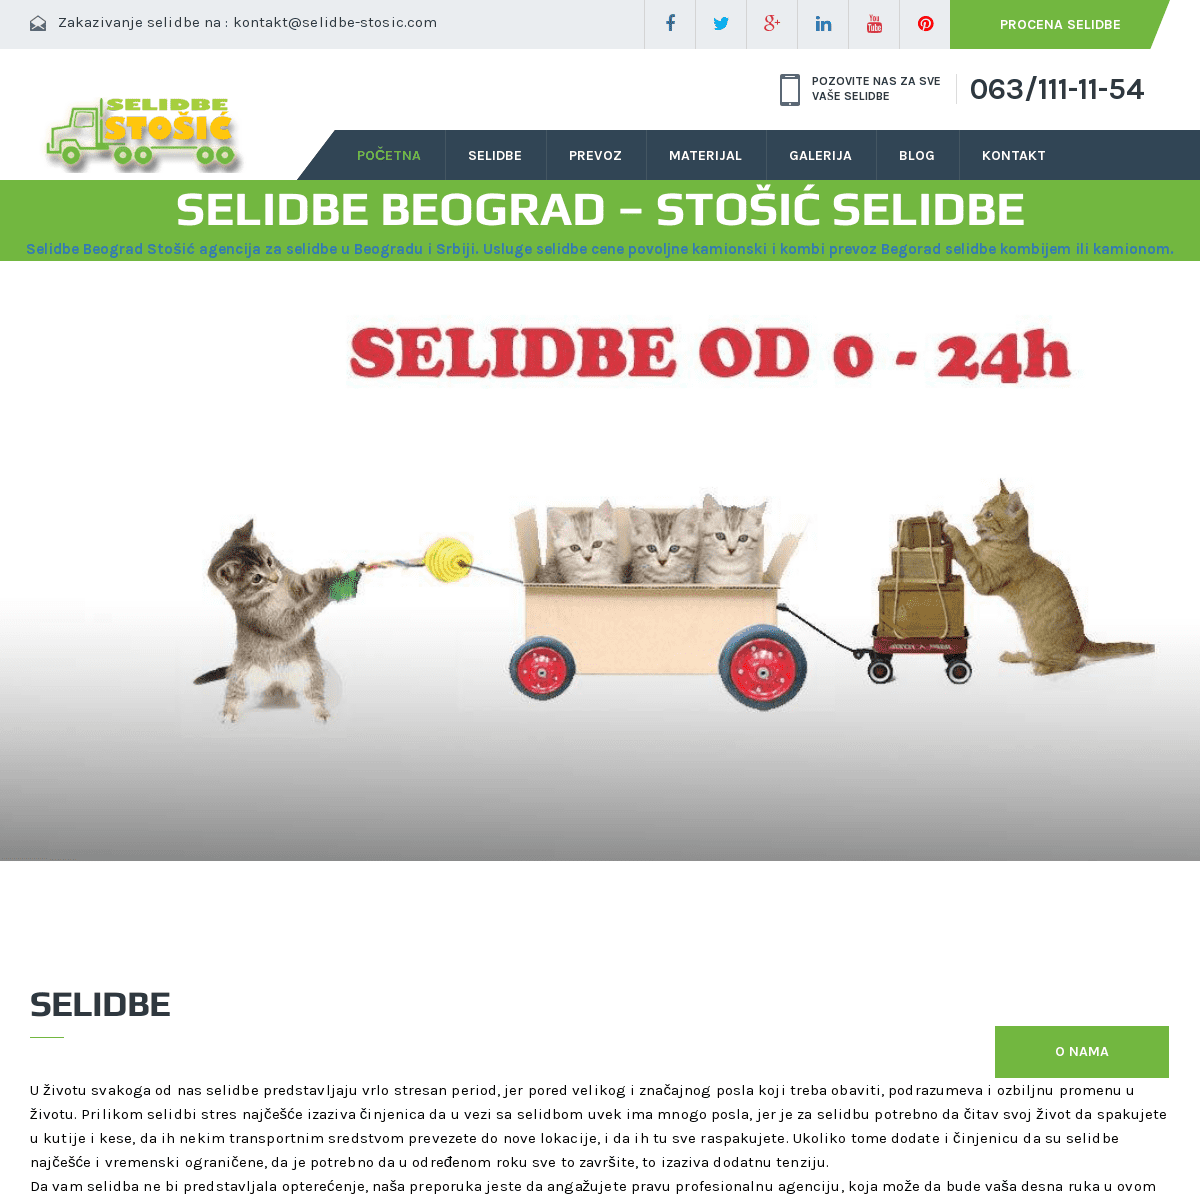 A complete backup of selidbe-stosic.com